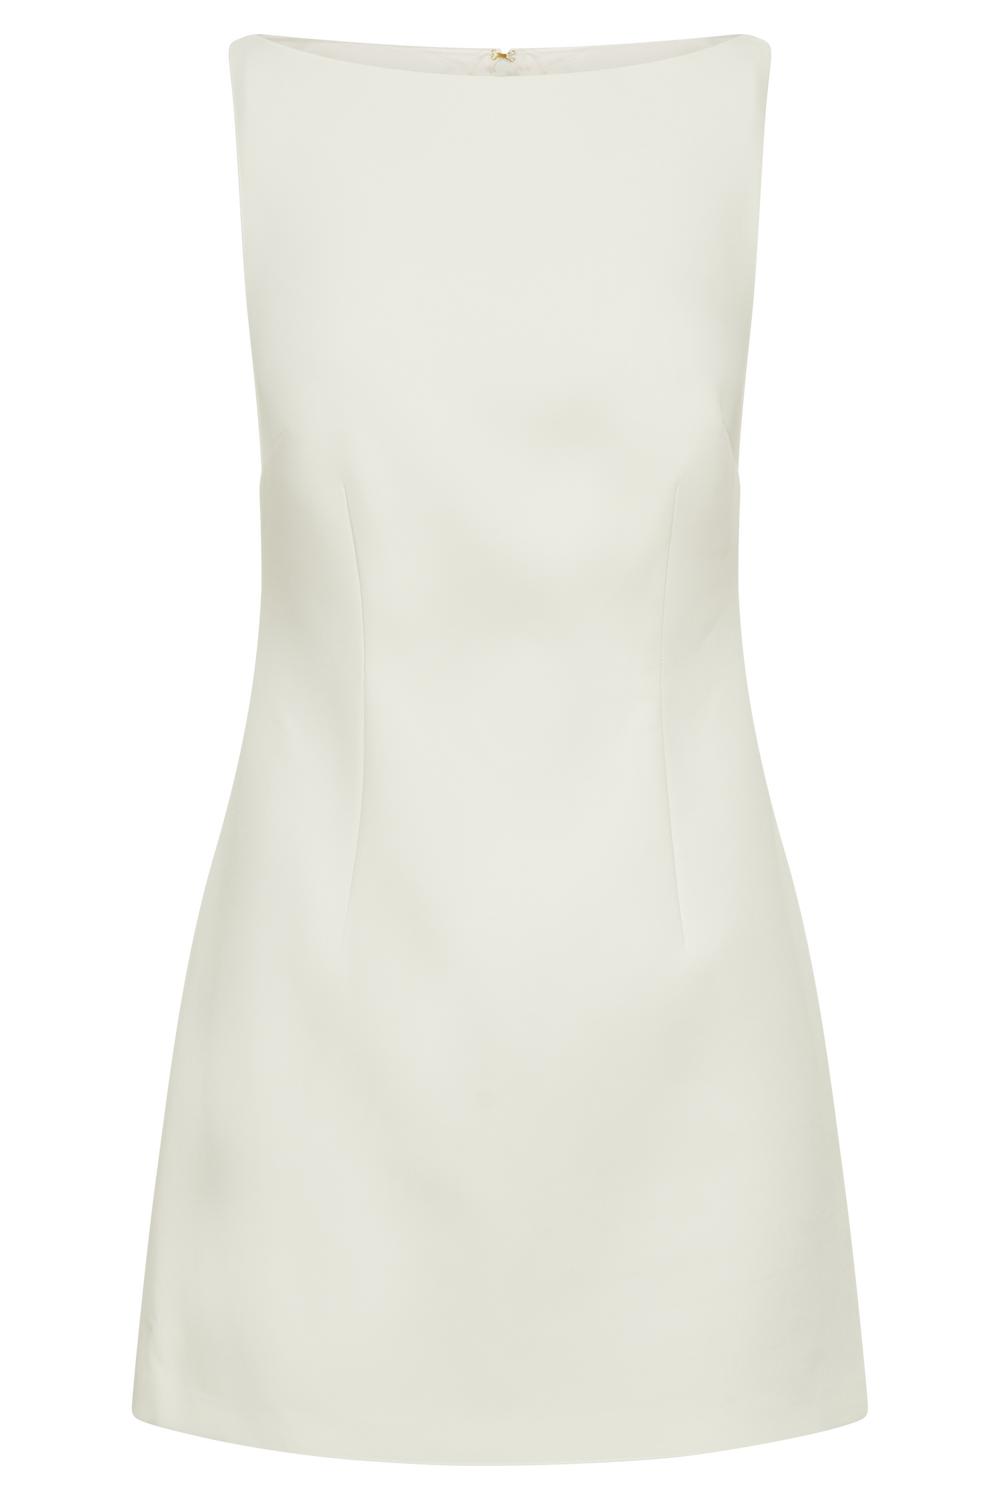 Angela Suiting Mini Dress - Ivory